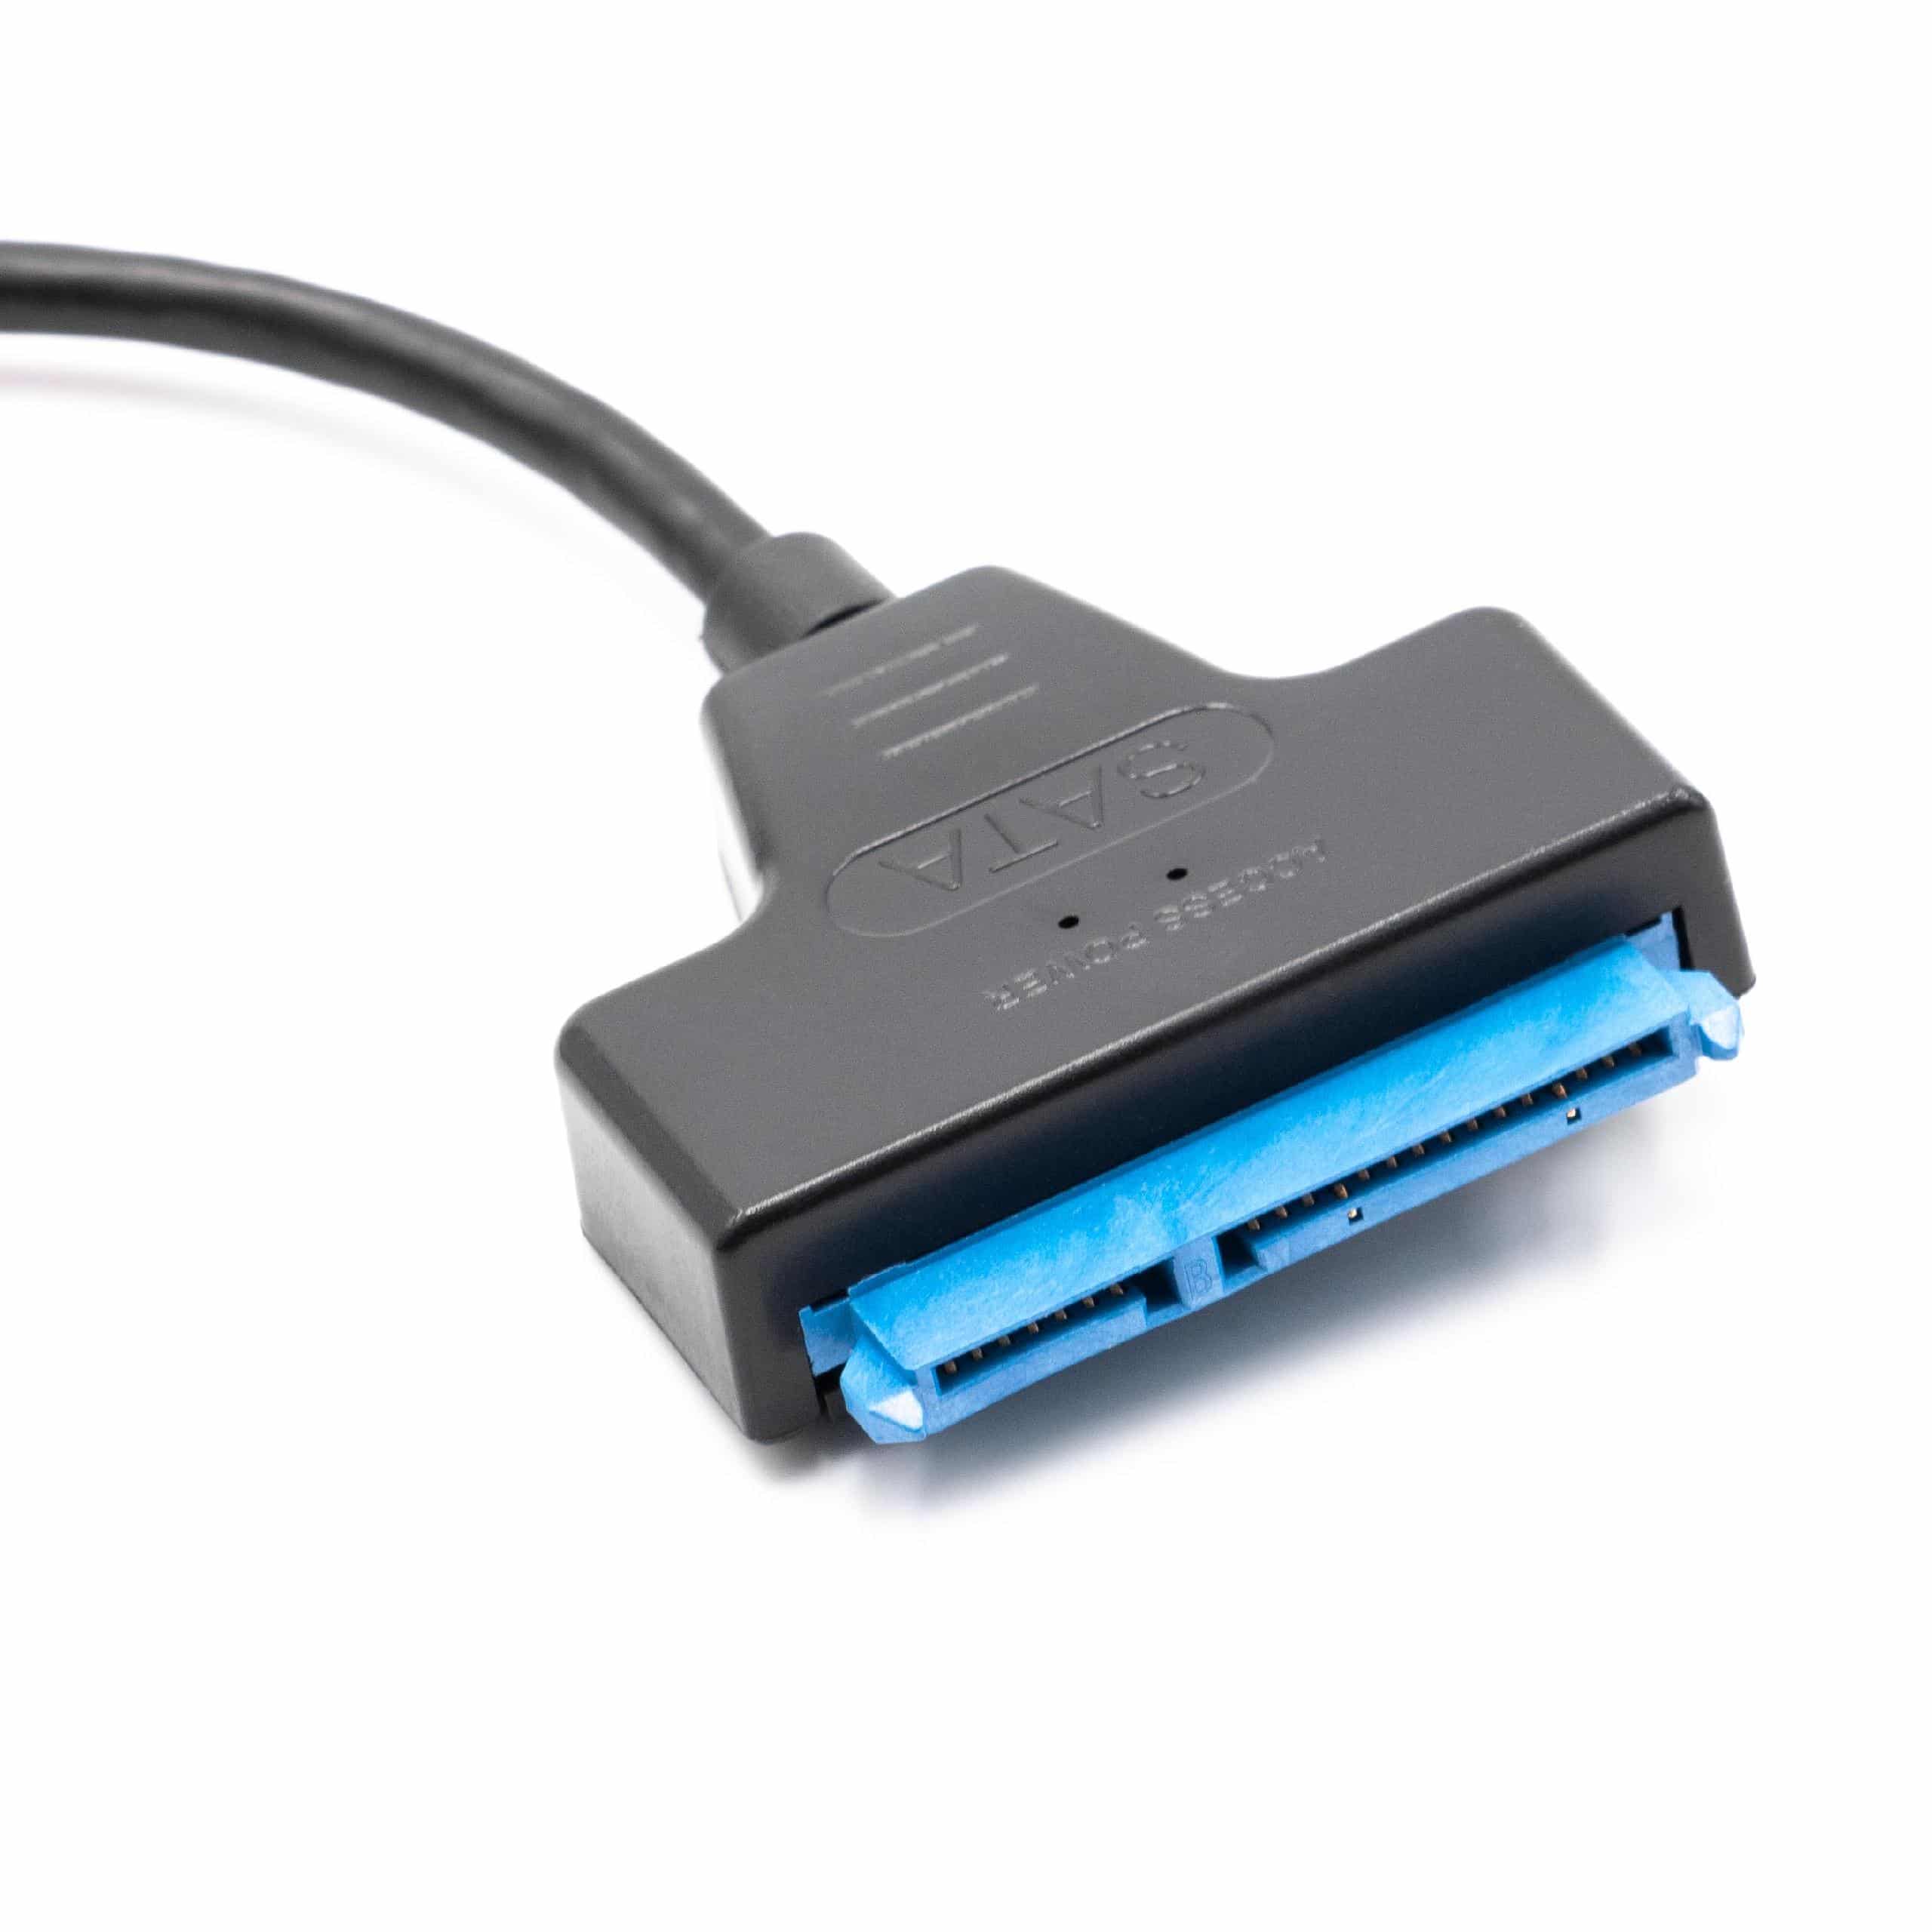 SATA III a USB 3.0 Cable adaptador de disco duro, cable de conexión para HDD, SSDdiscos duros, con capacidad P